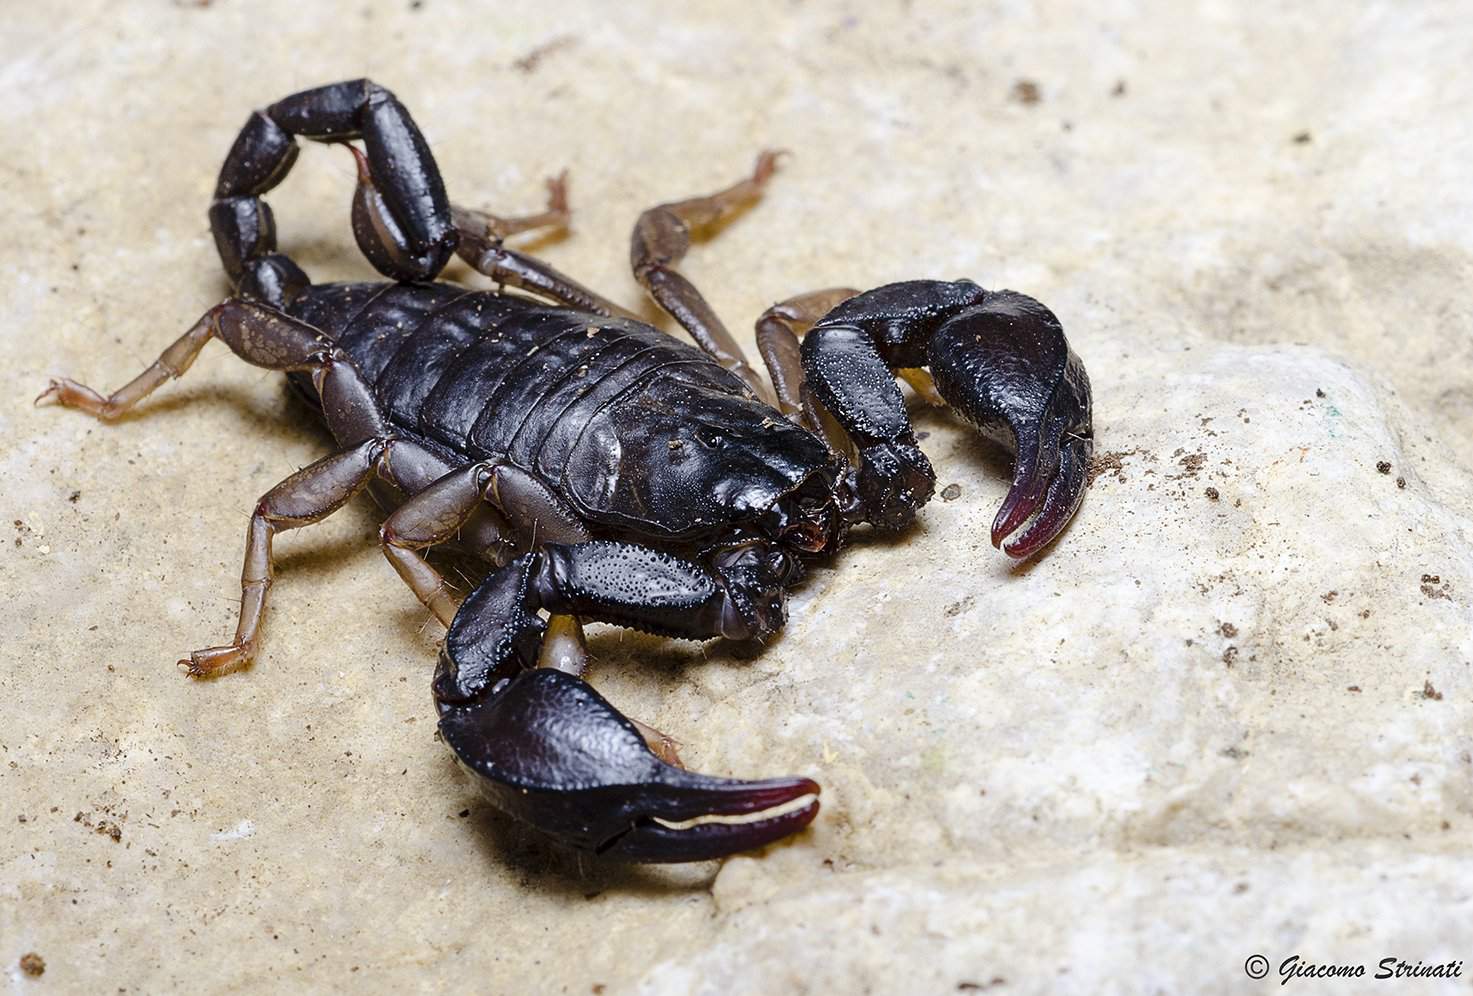 Euscorpius italicus) - вид скорпионов из семейства Euscorpi.